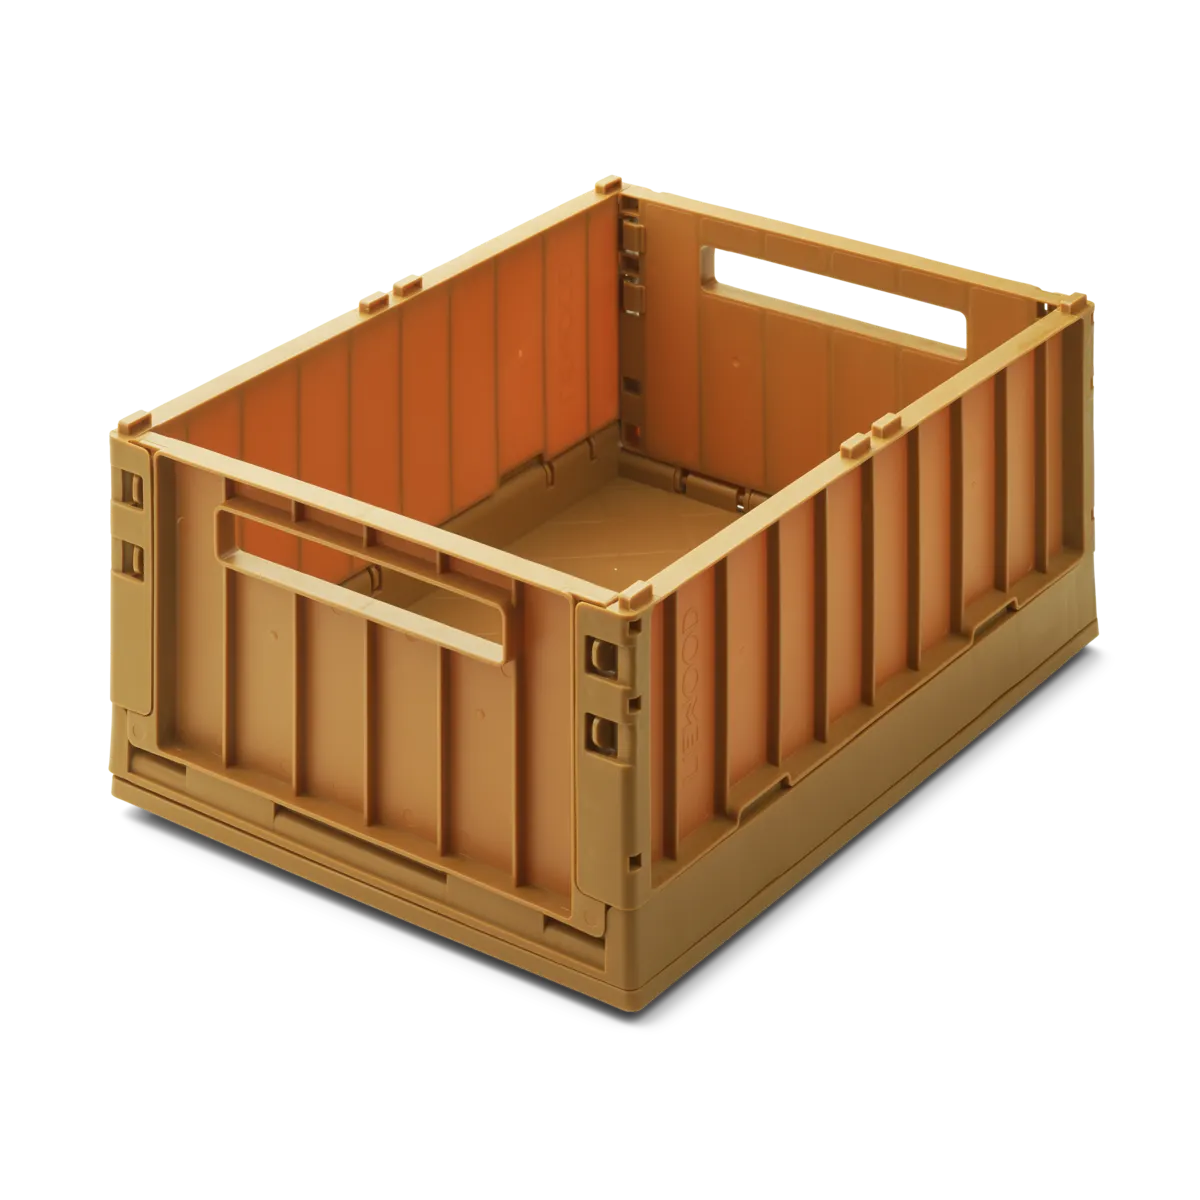 Weston storage box M w. lid 2-pack - Golden Caramel